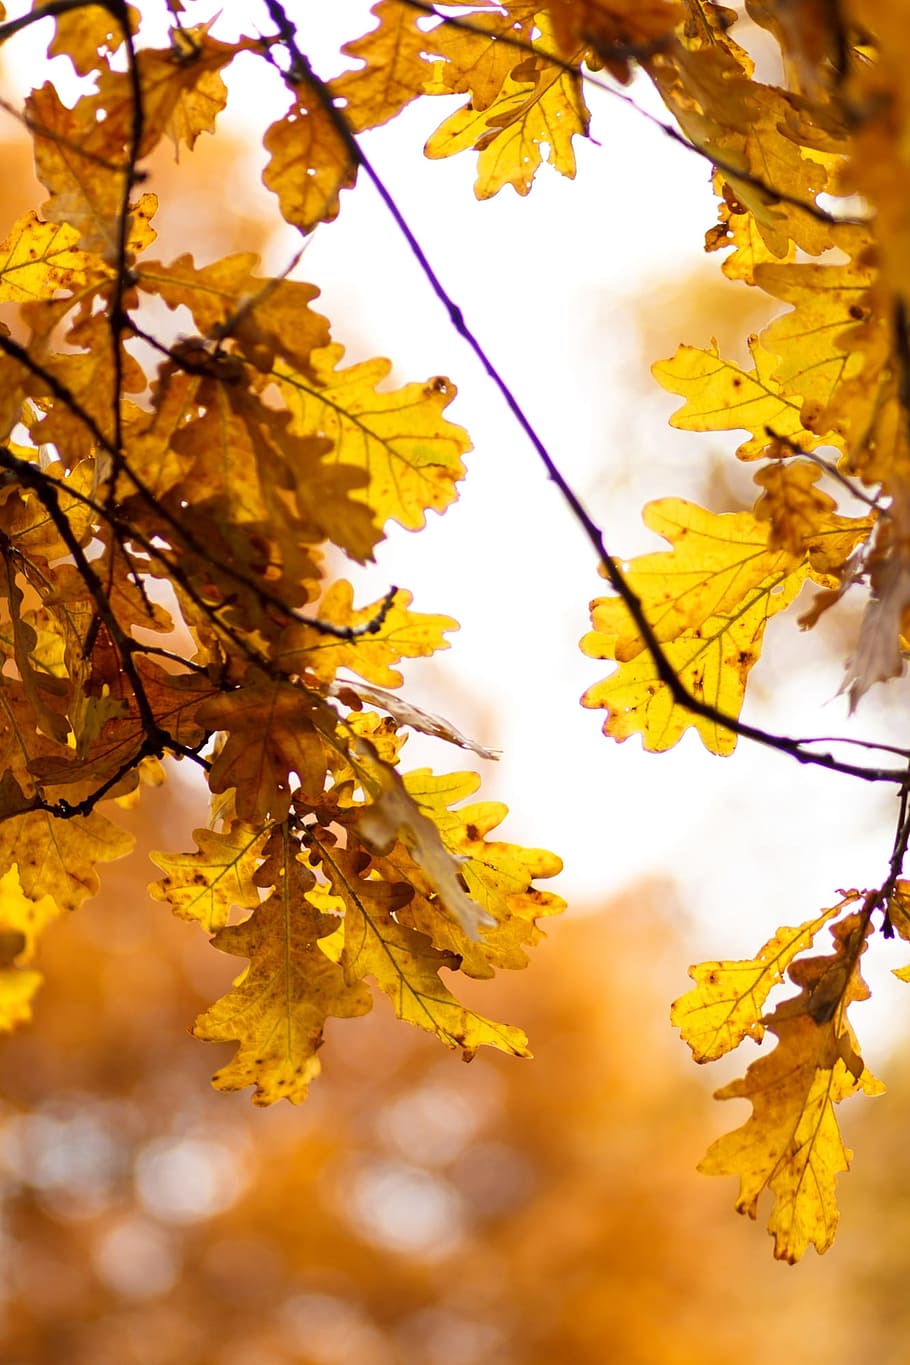 ek, musim gugur, kuning, daun ek, alam, selebaran, daun, pohon, hutan, lembaran menguning